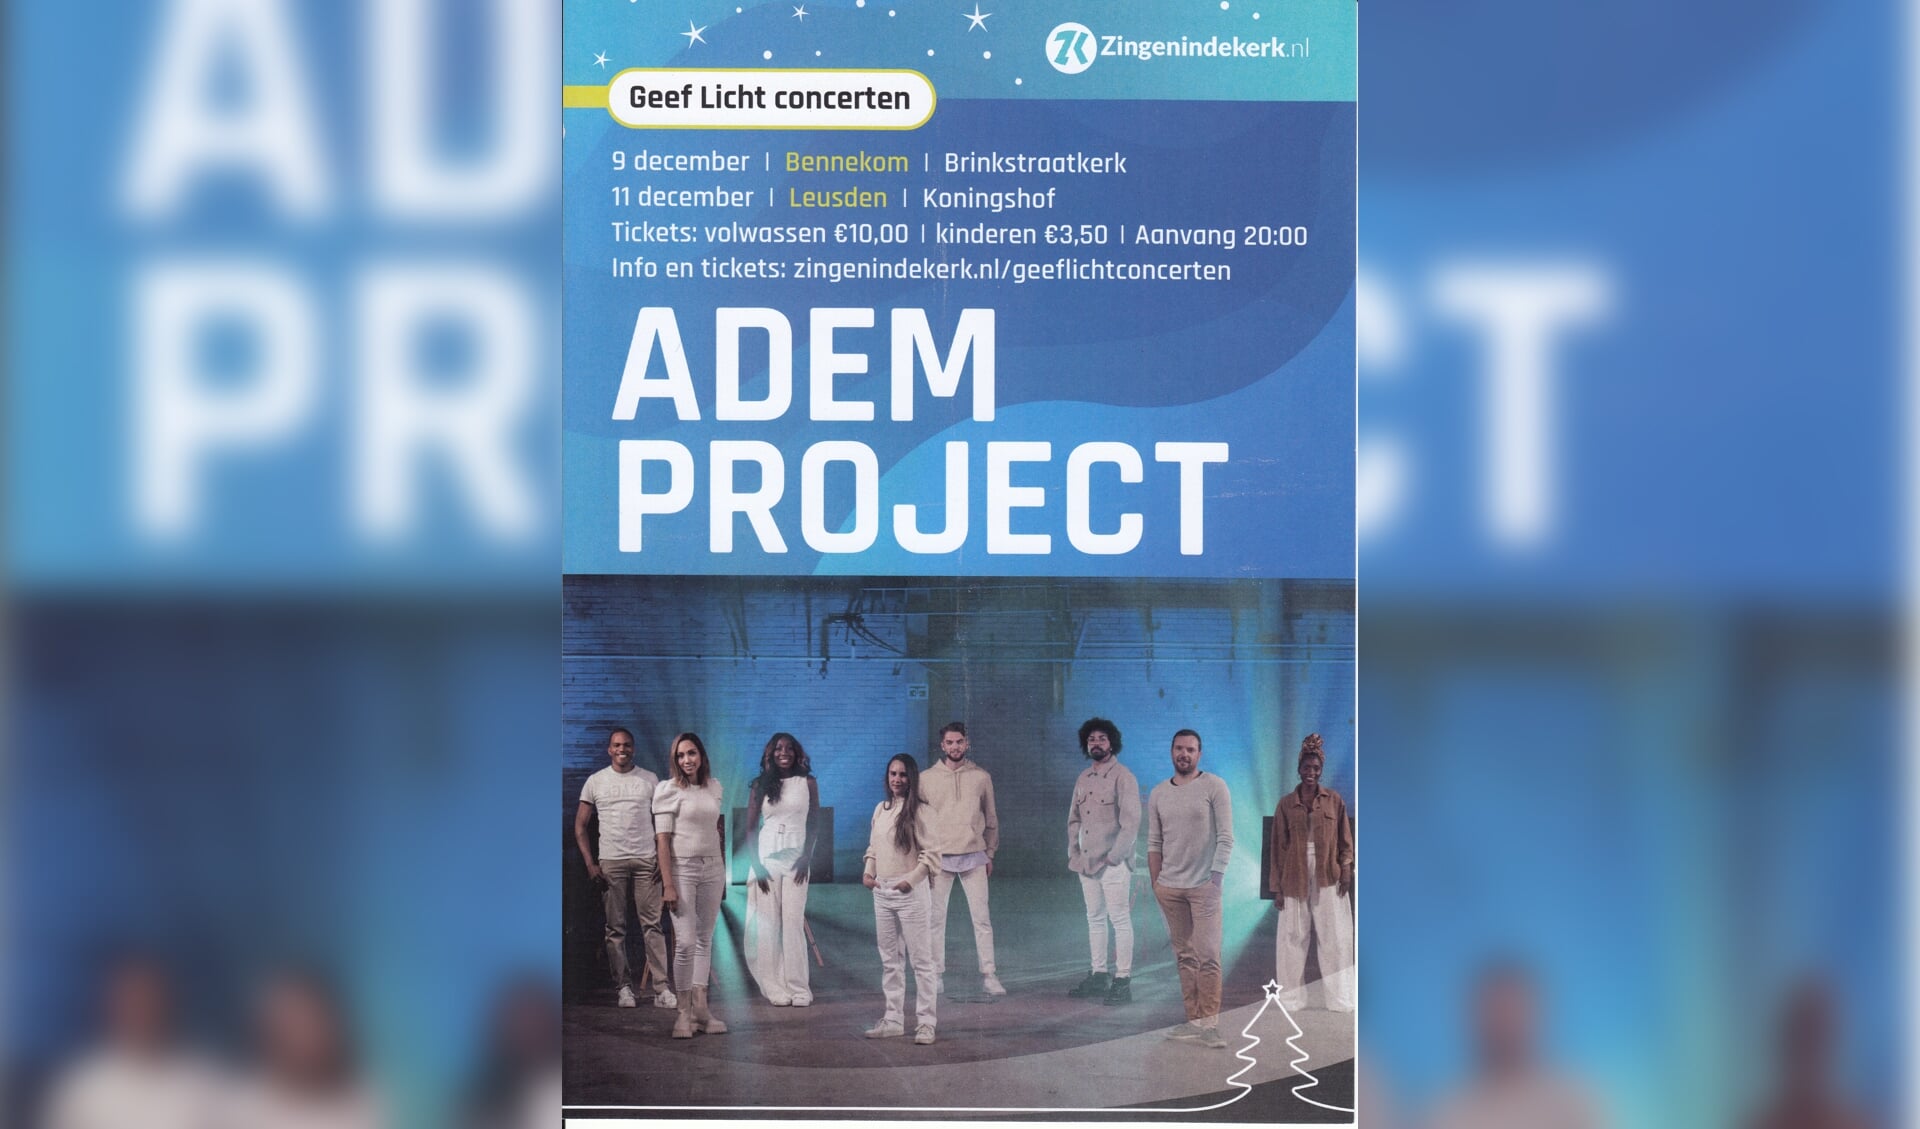 Project ADEM